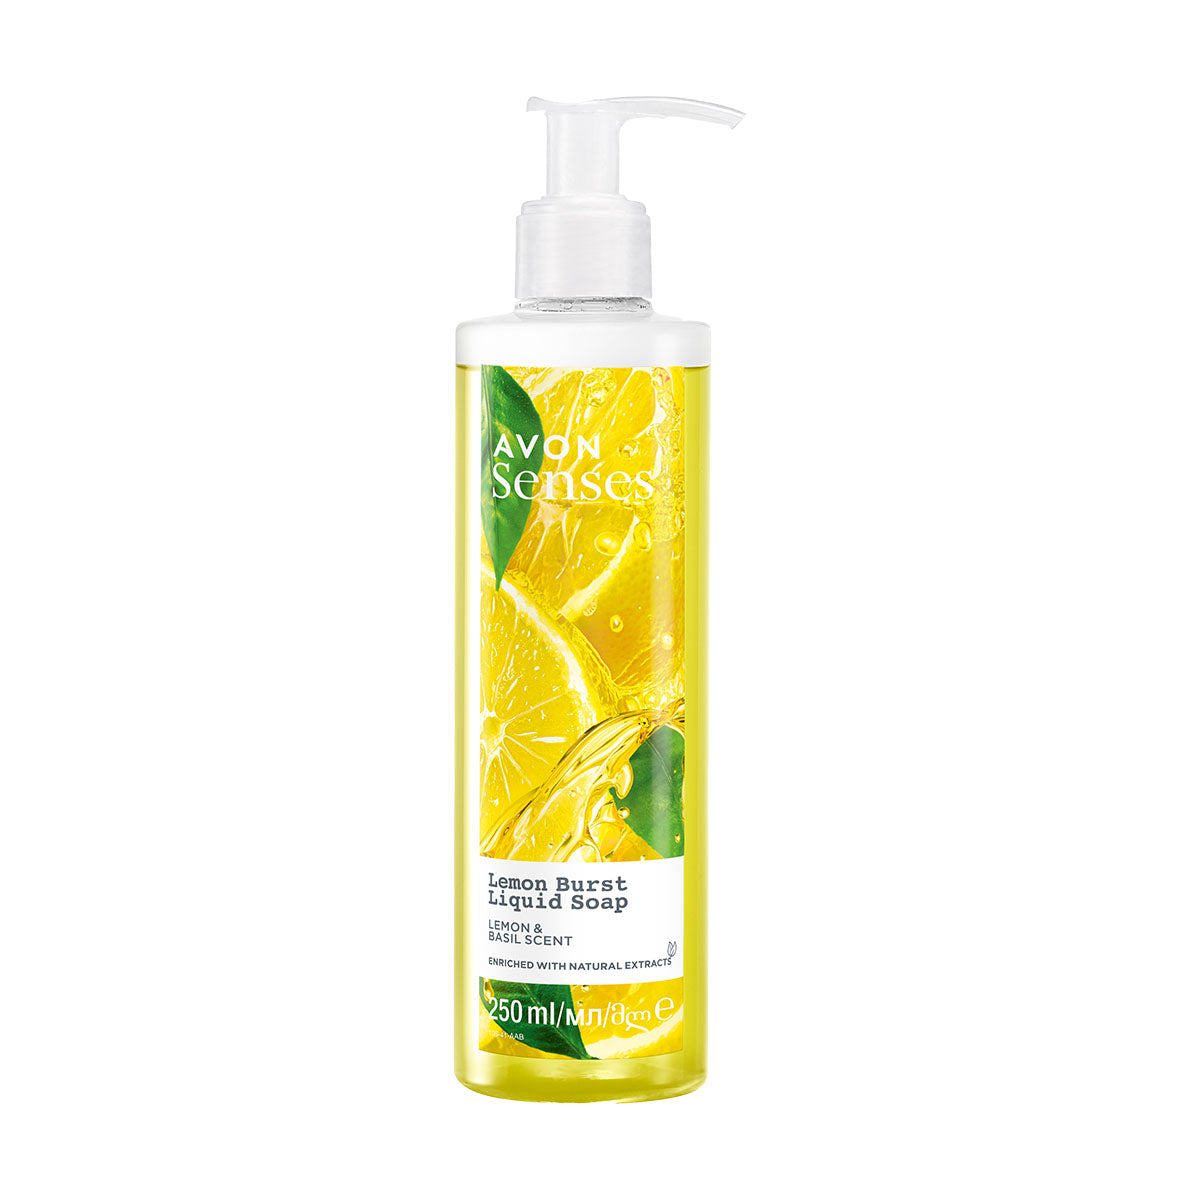 Avon Senses Lemon Burst Liquid Soap 250ml